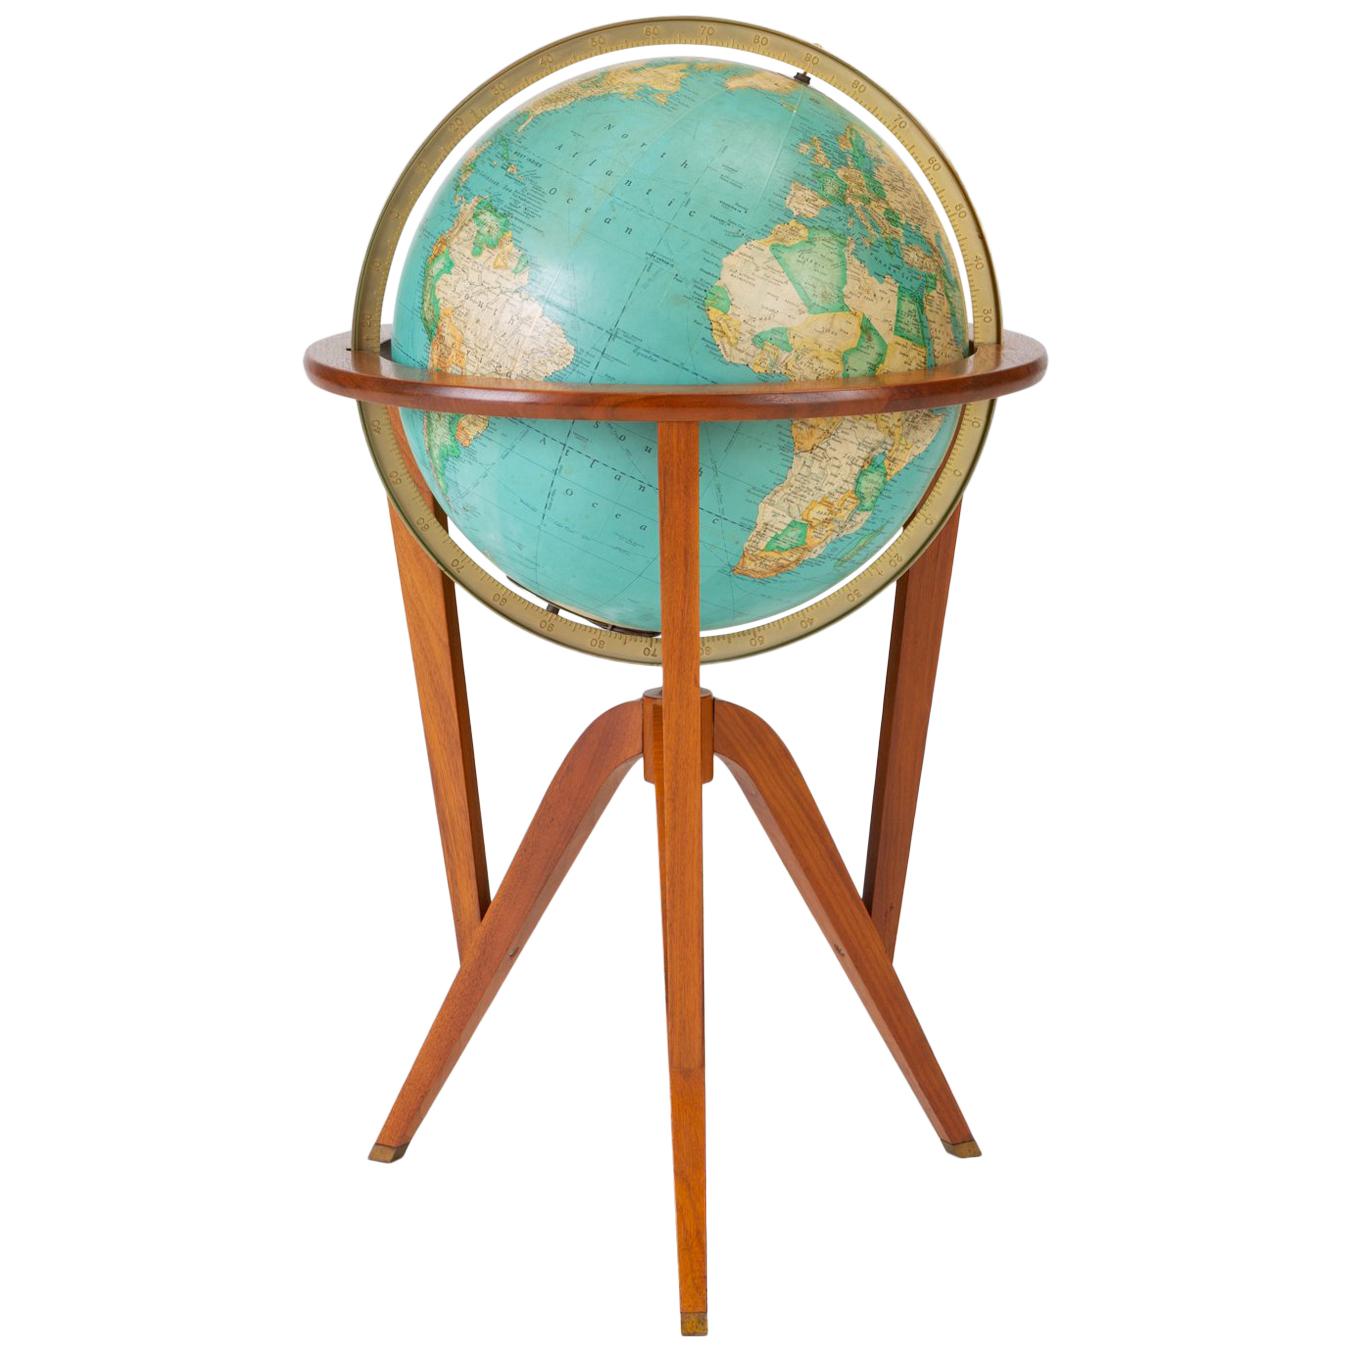 Rand McNally “Cosmopolitan” Globe with Stand by Edward Wormley